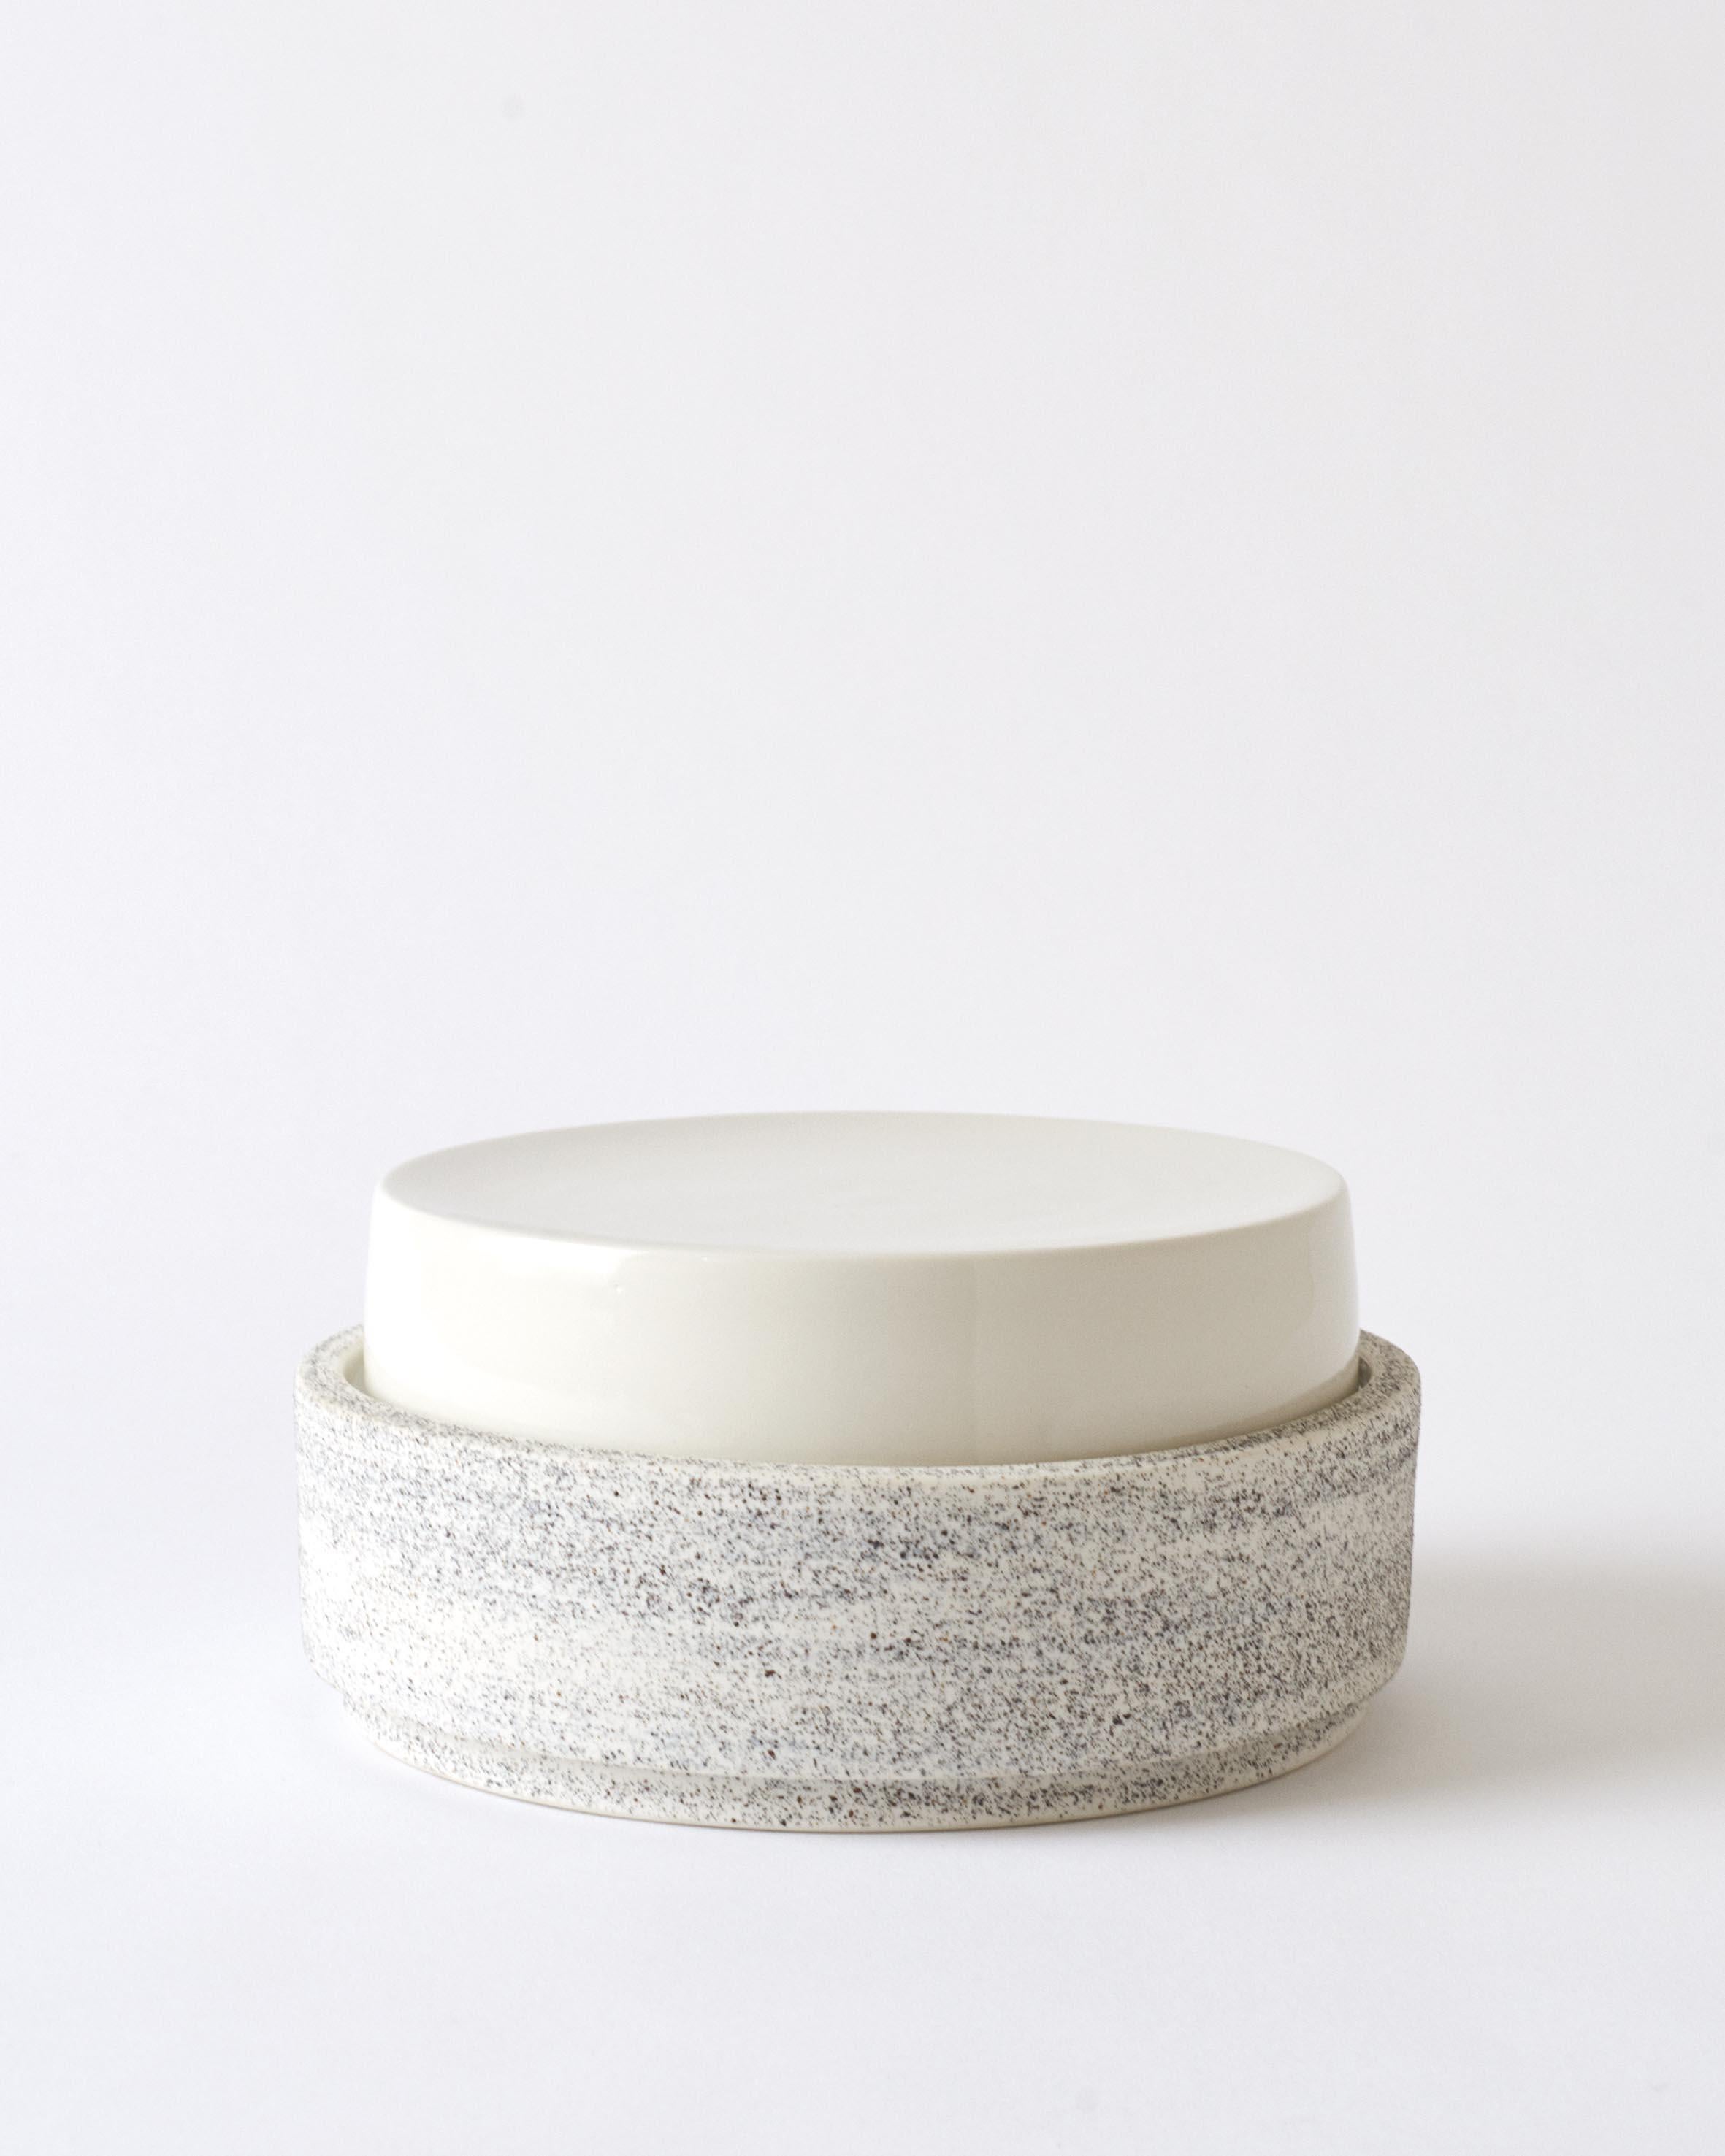 Modern Contemporary Porcelain Bowl, Handmade, Elevated For Sale